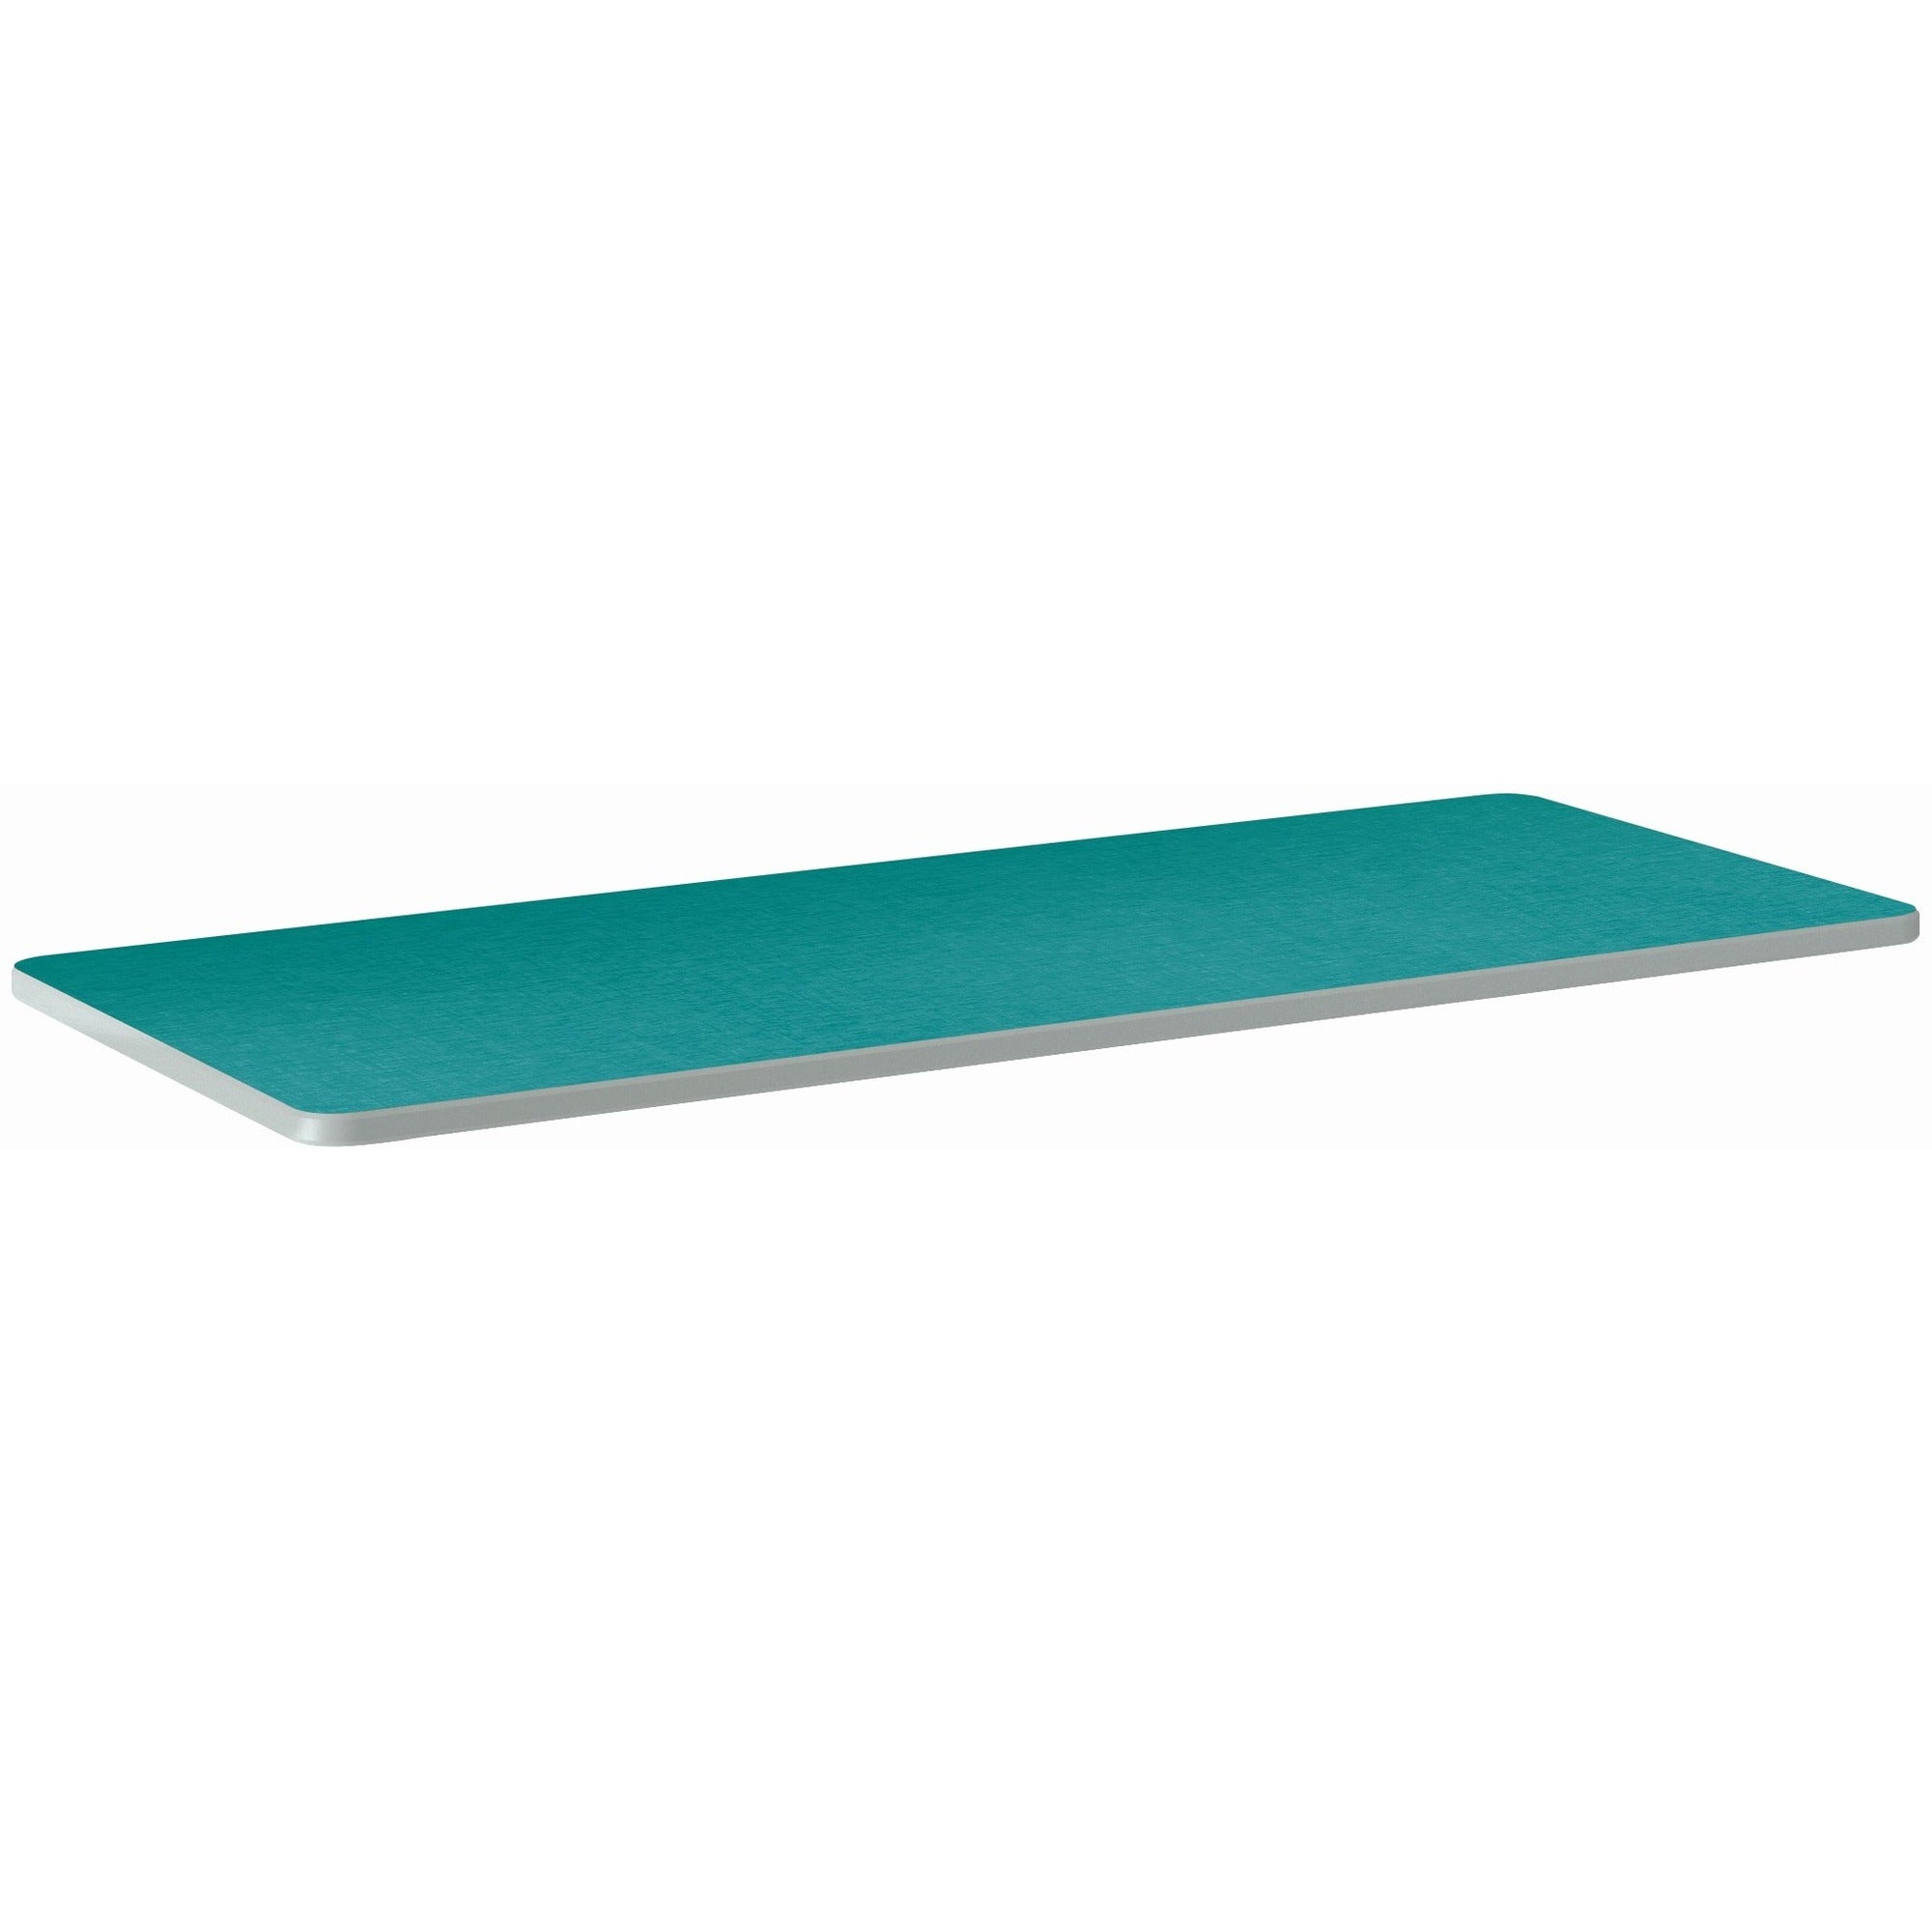 hon-build-series-rectangular-tabletop-for-table-toprectangle-top-25-to-34-adjustment-x-60-width-x-24-depth-moroccan_hontr2460enlm1k - 1